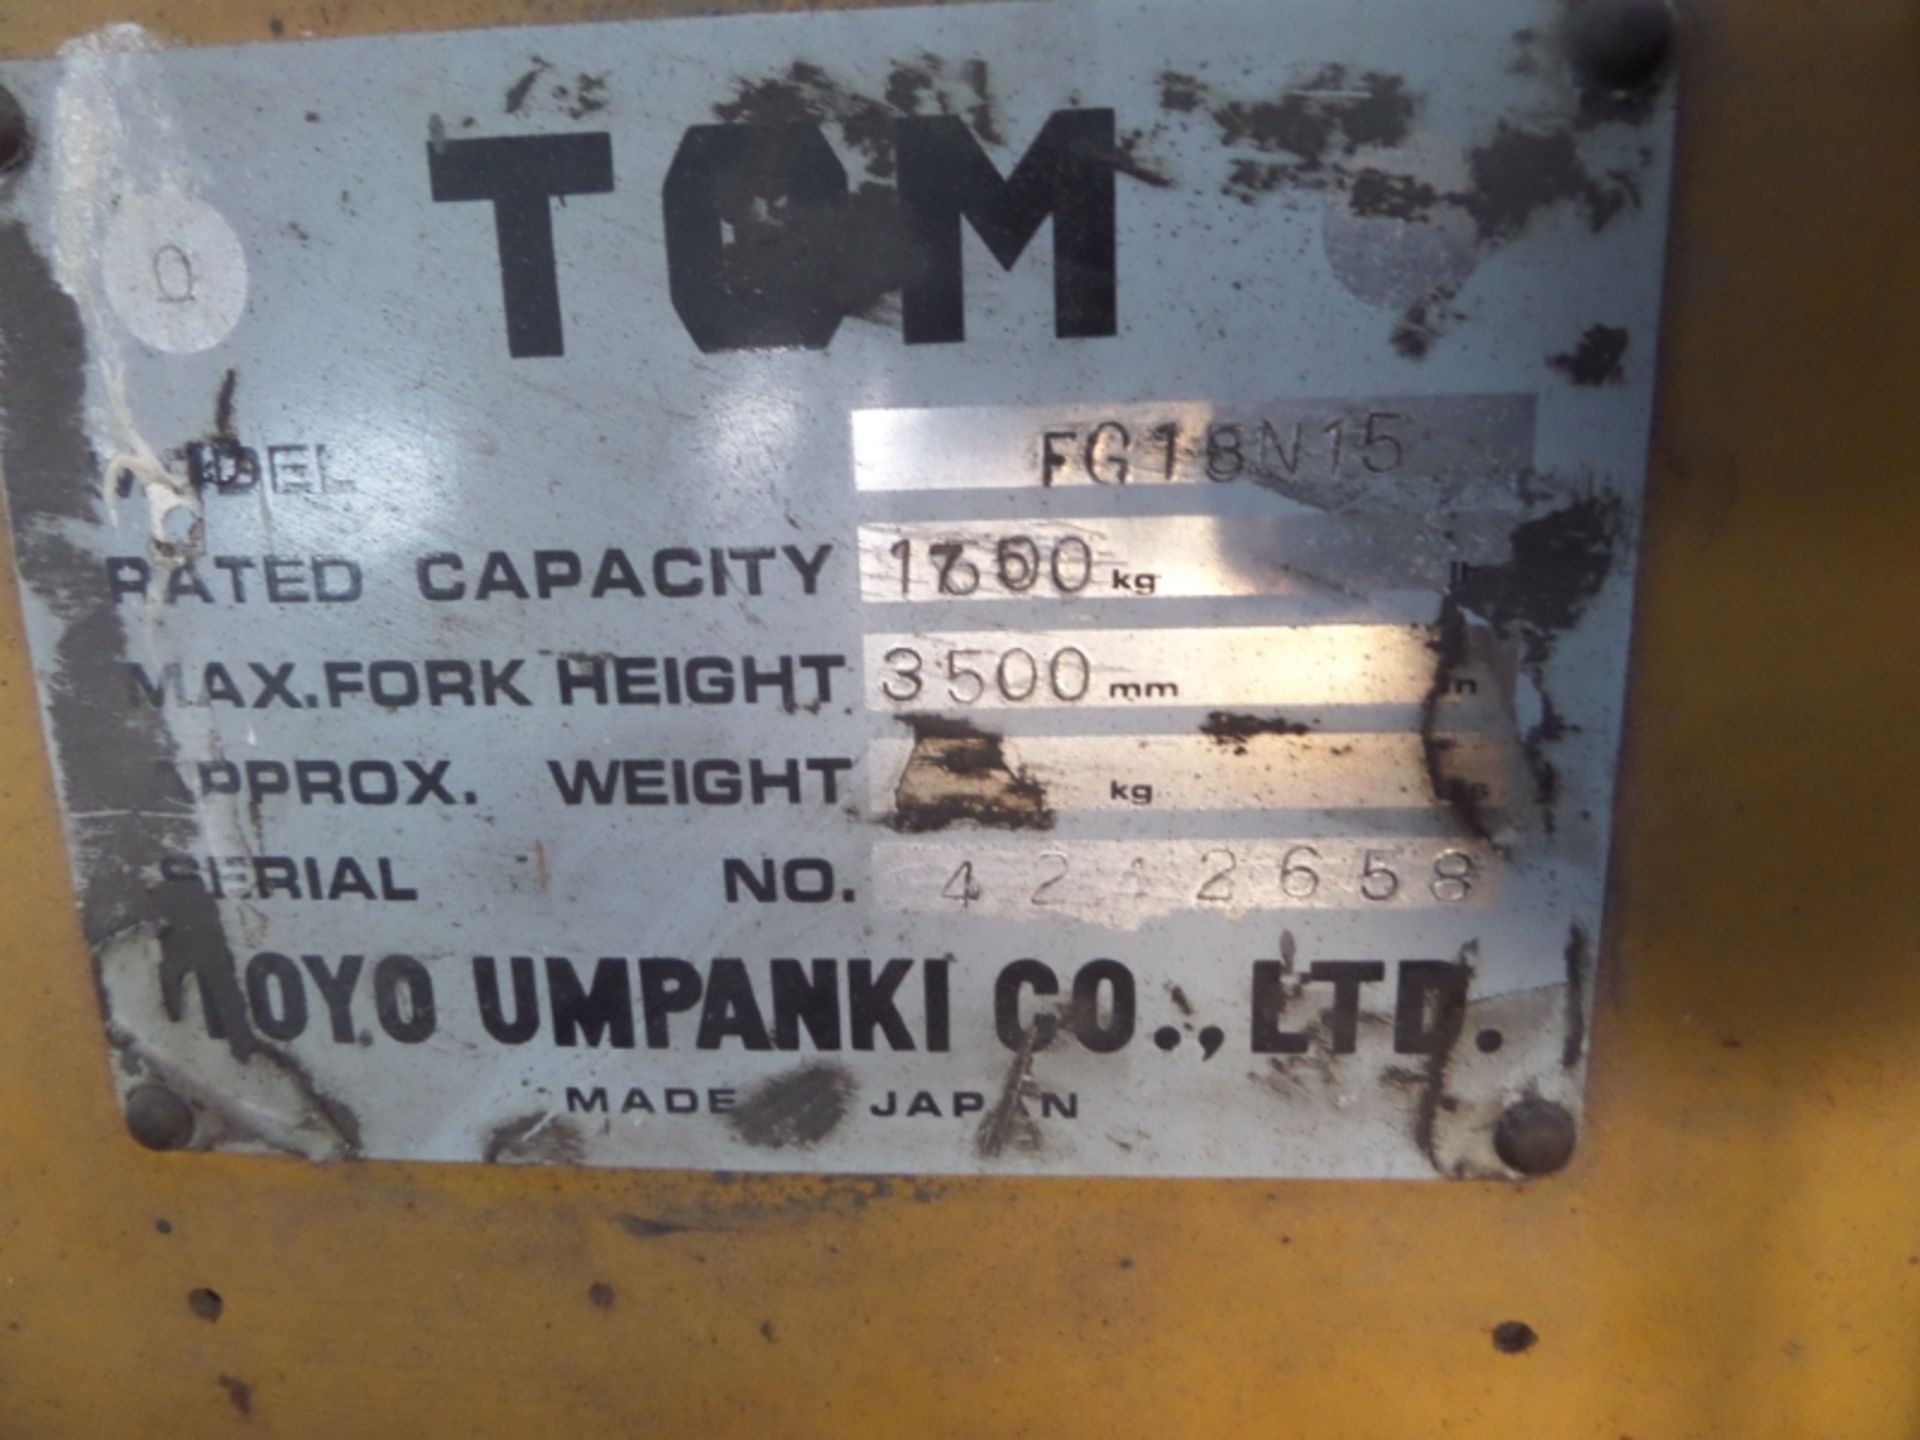 TCM FG18 N15 Plant LPG / CNG - VIN: 4212658 - Year: . - 6,624 Hours - Duplex Forklift - Image 4 of 7